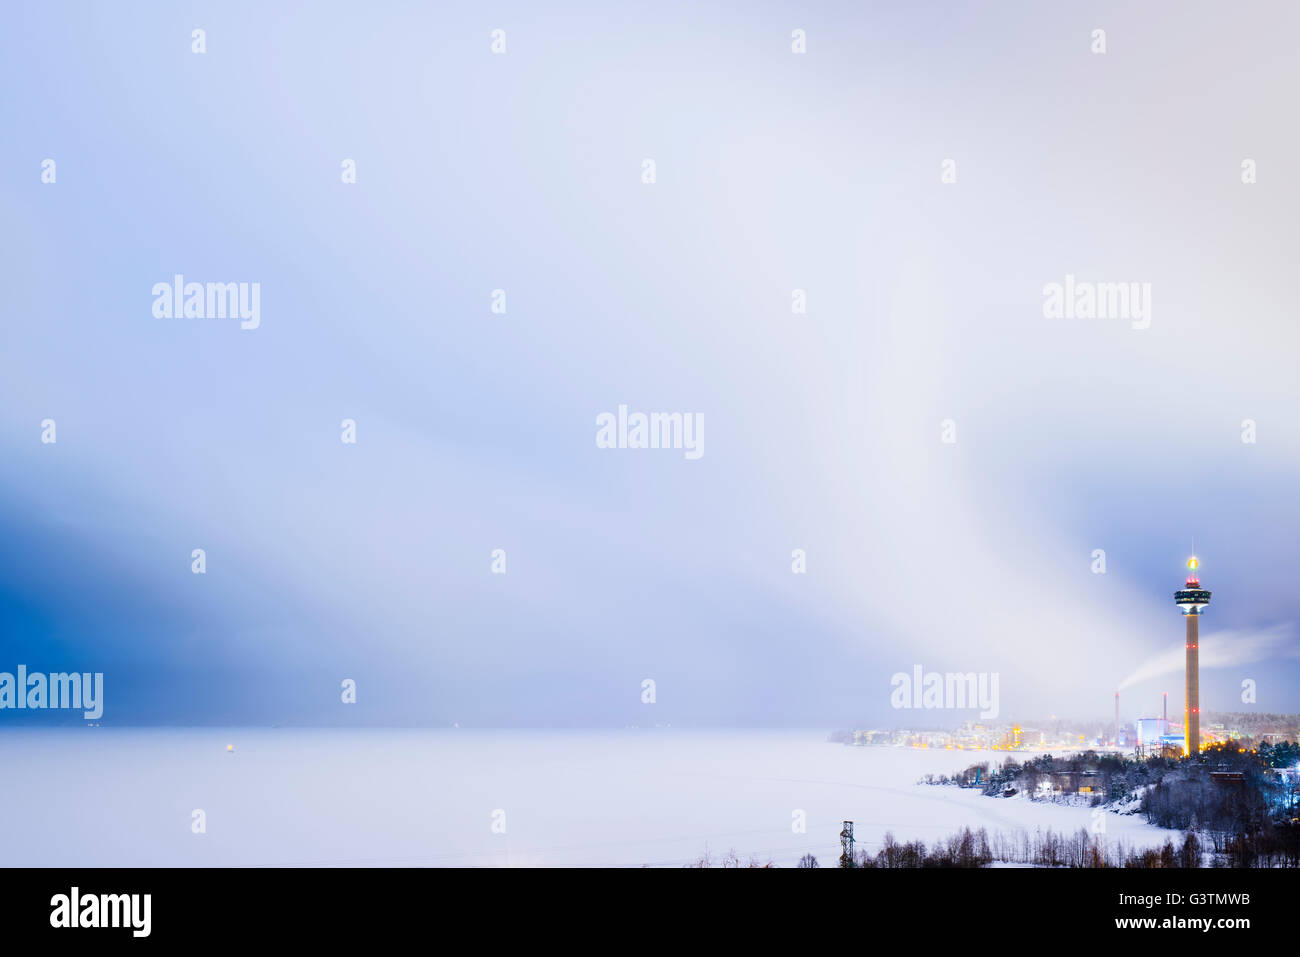 Finland, Pirkanmaa, Tampere, Nasijarvi, Illuminated communications tower over city by lake at dusk Stock Photo